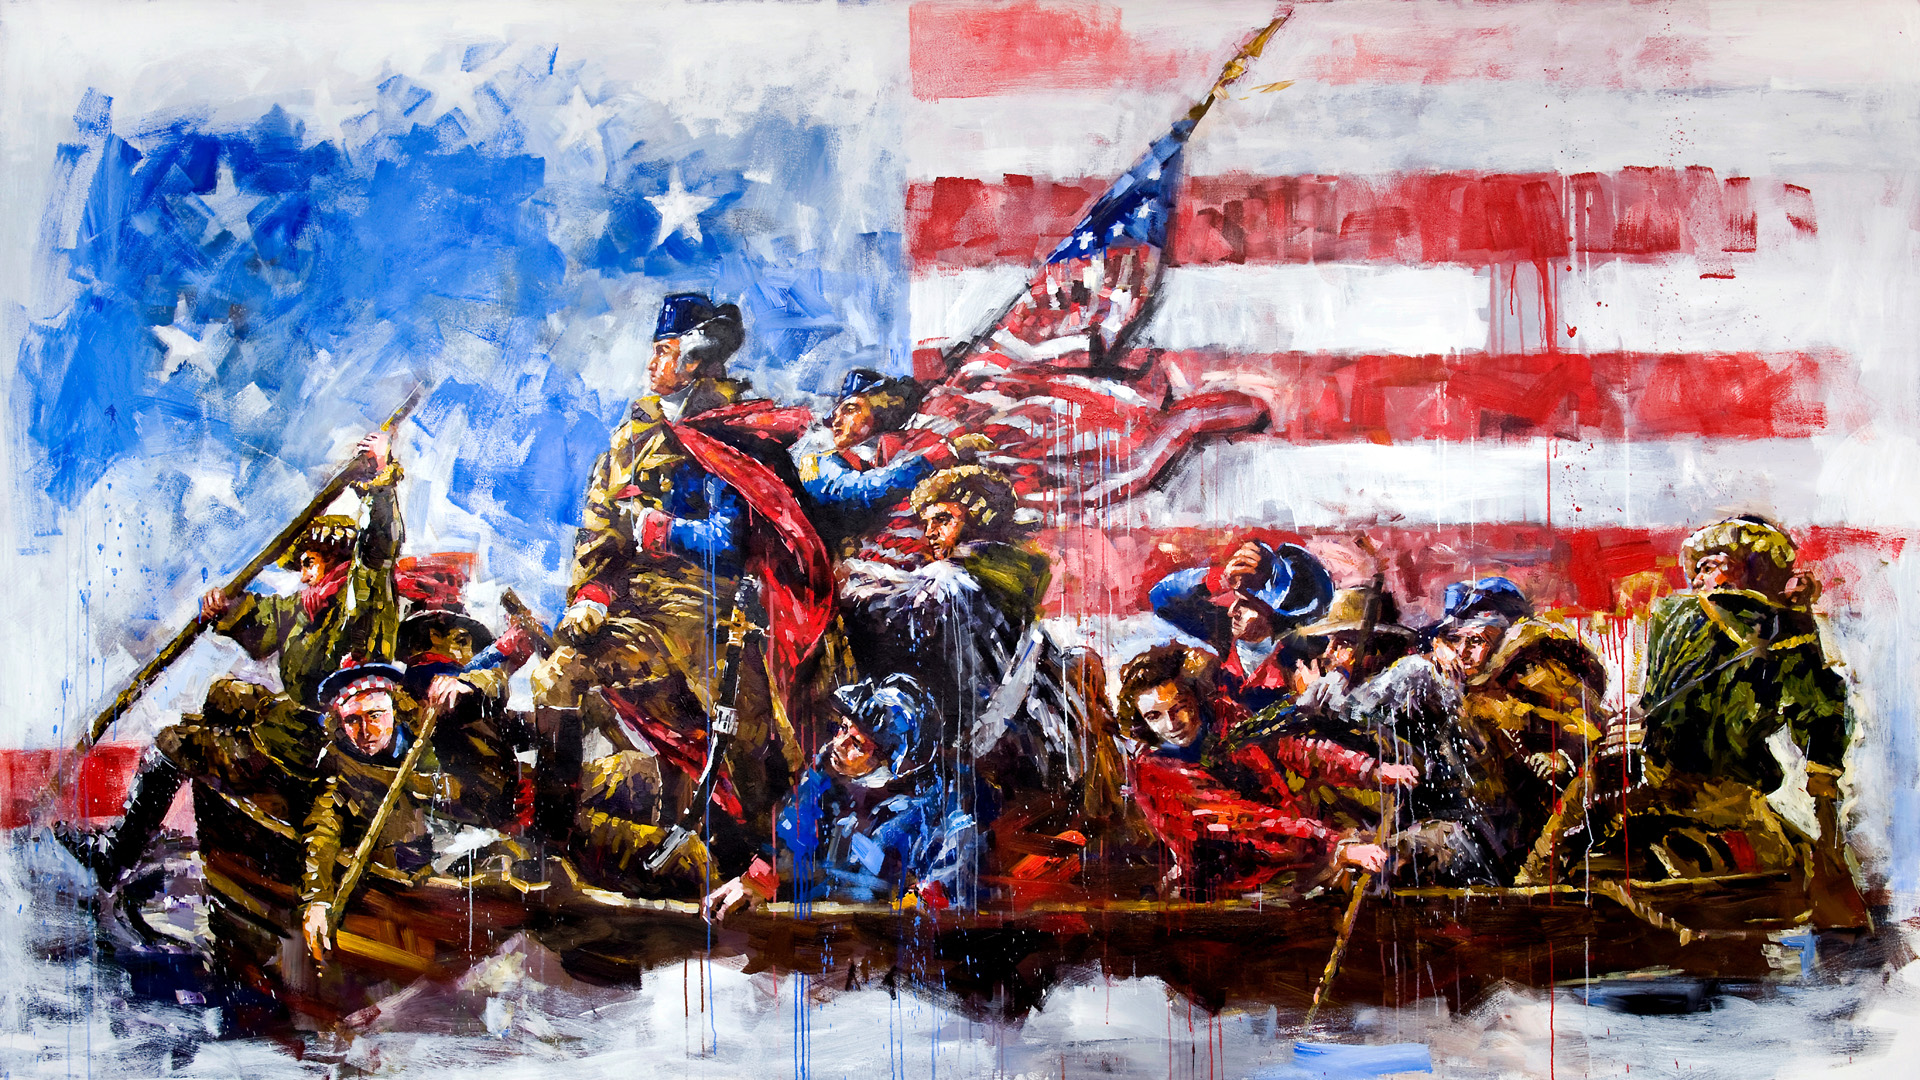 Washington Crossing The Delaware Painting 1080p Wallpaper